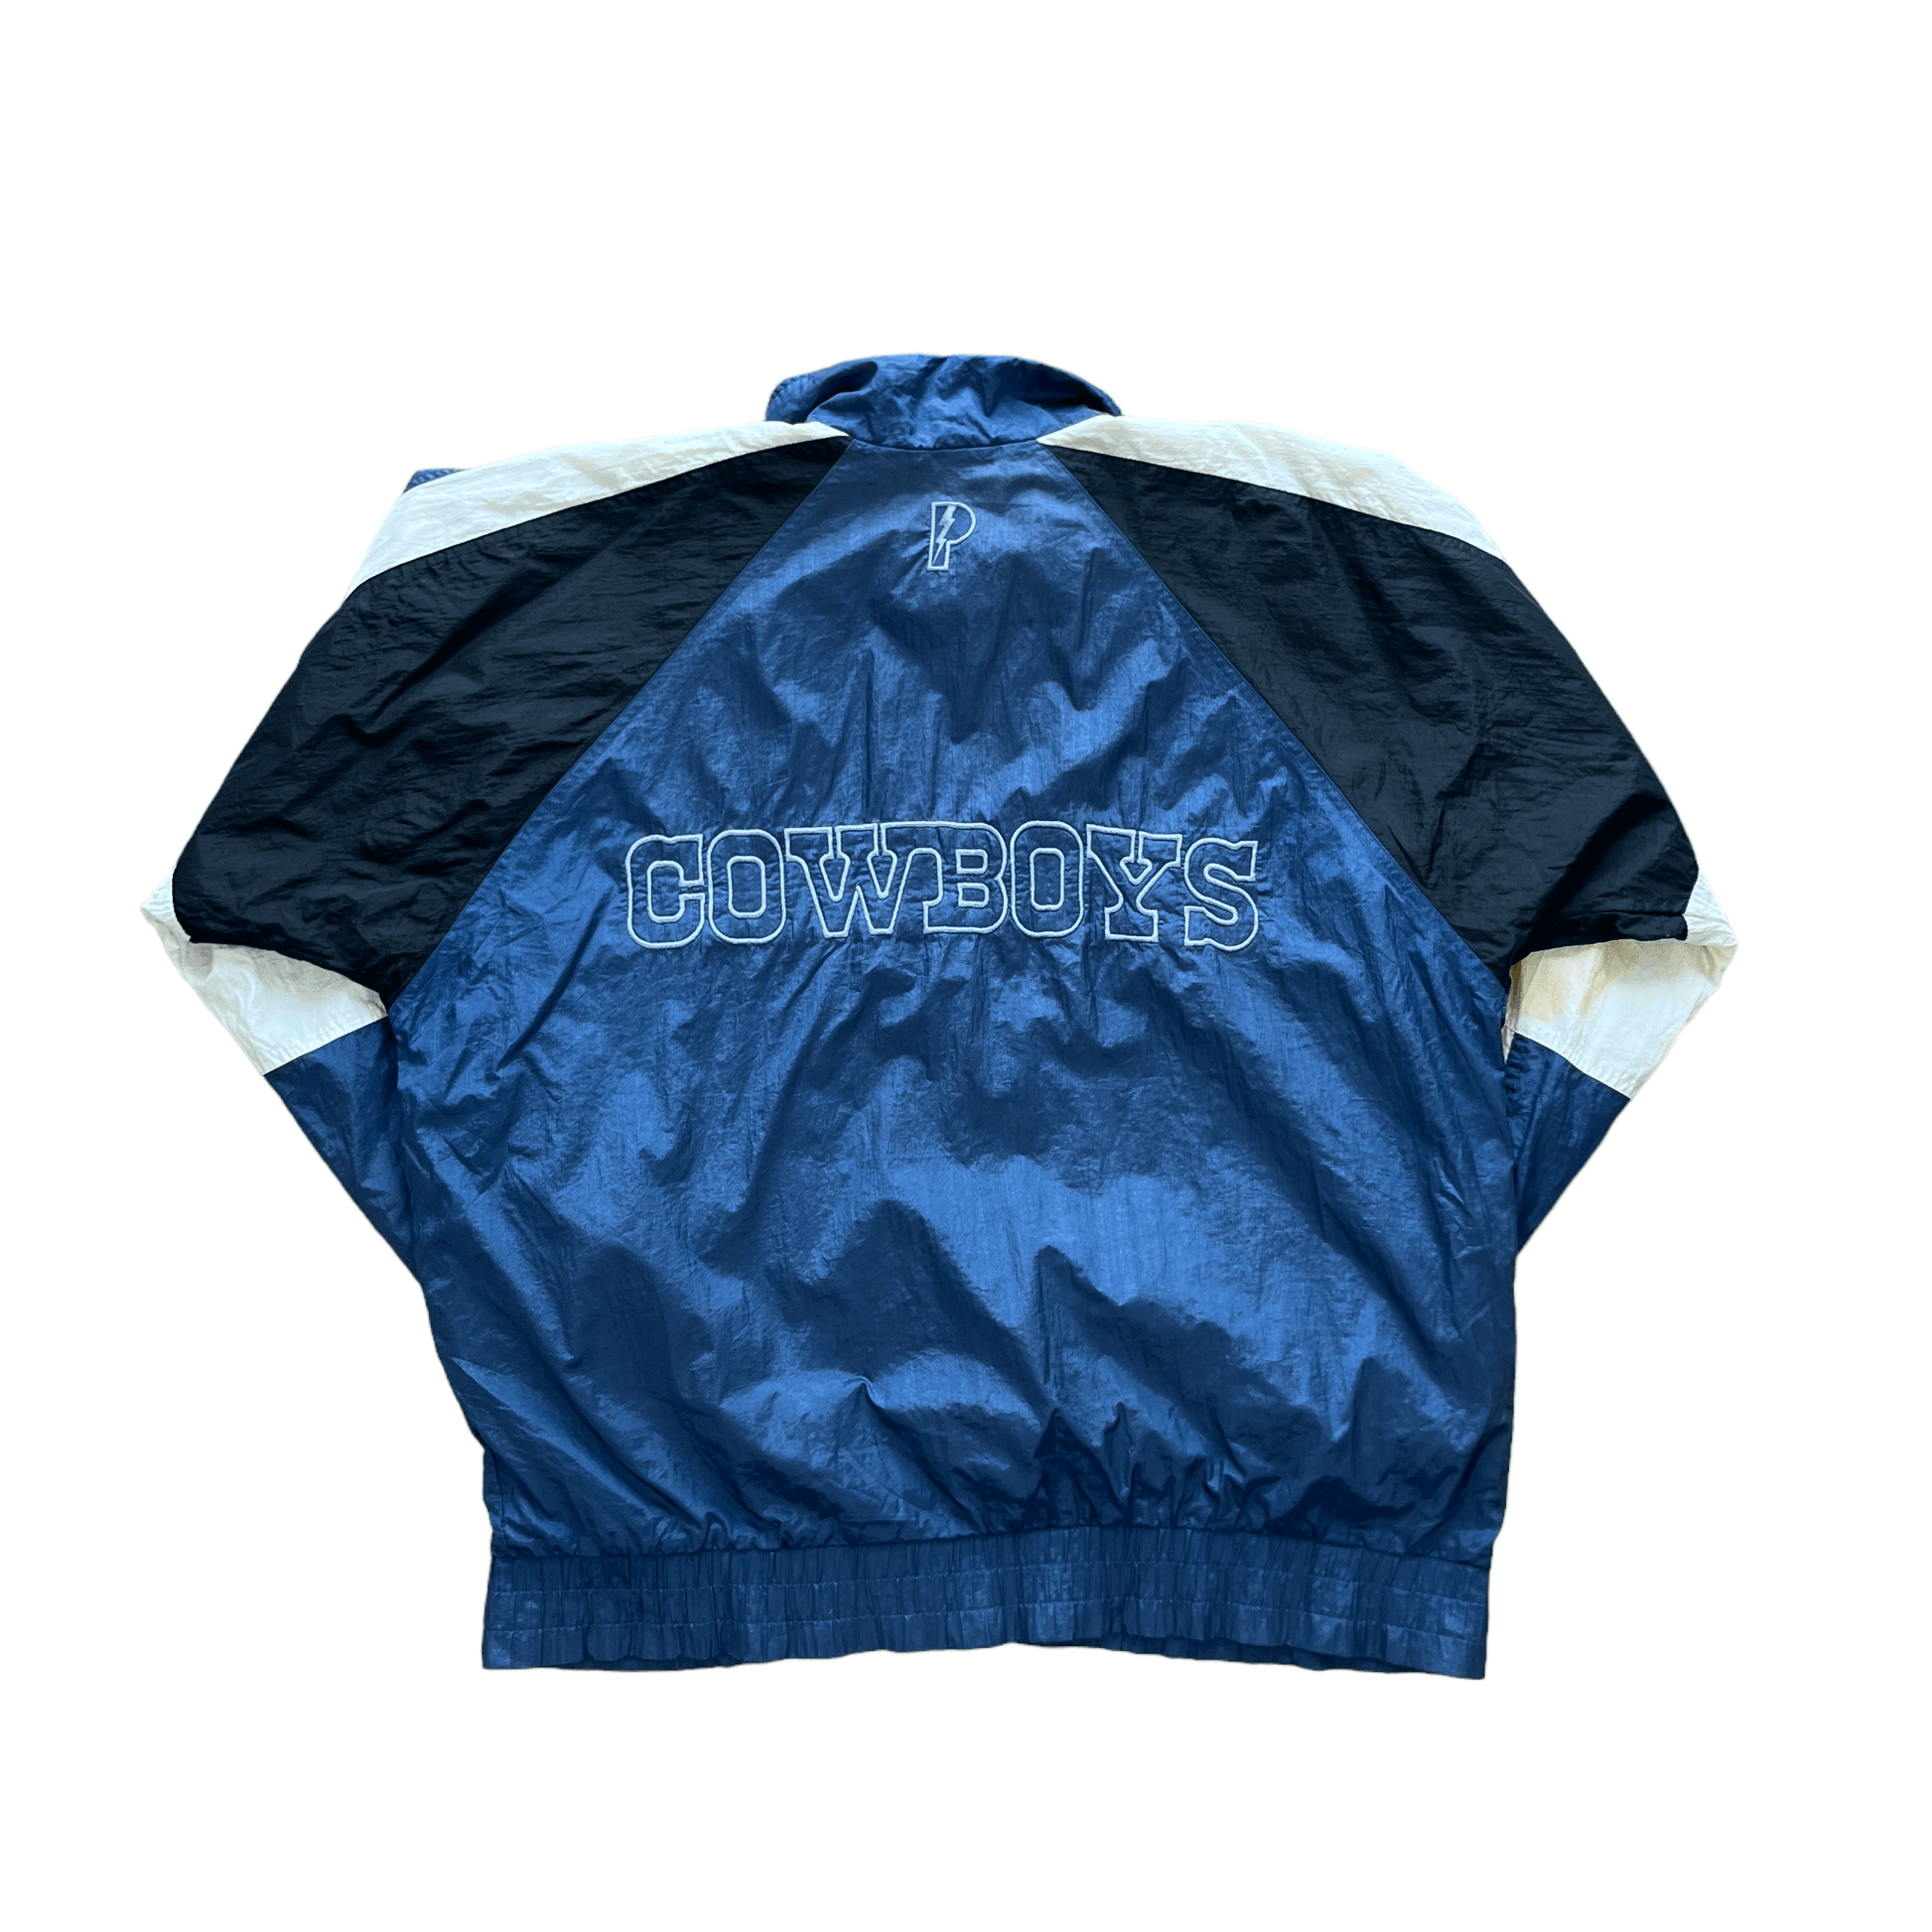 Vintage 90s Blue, Black + White Pro Player NFL Cowboys Jacket - Large - The Streetwear Studio